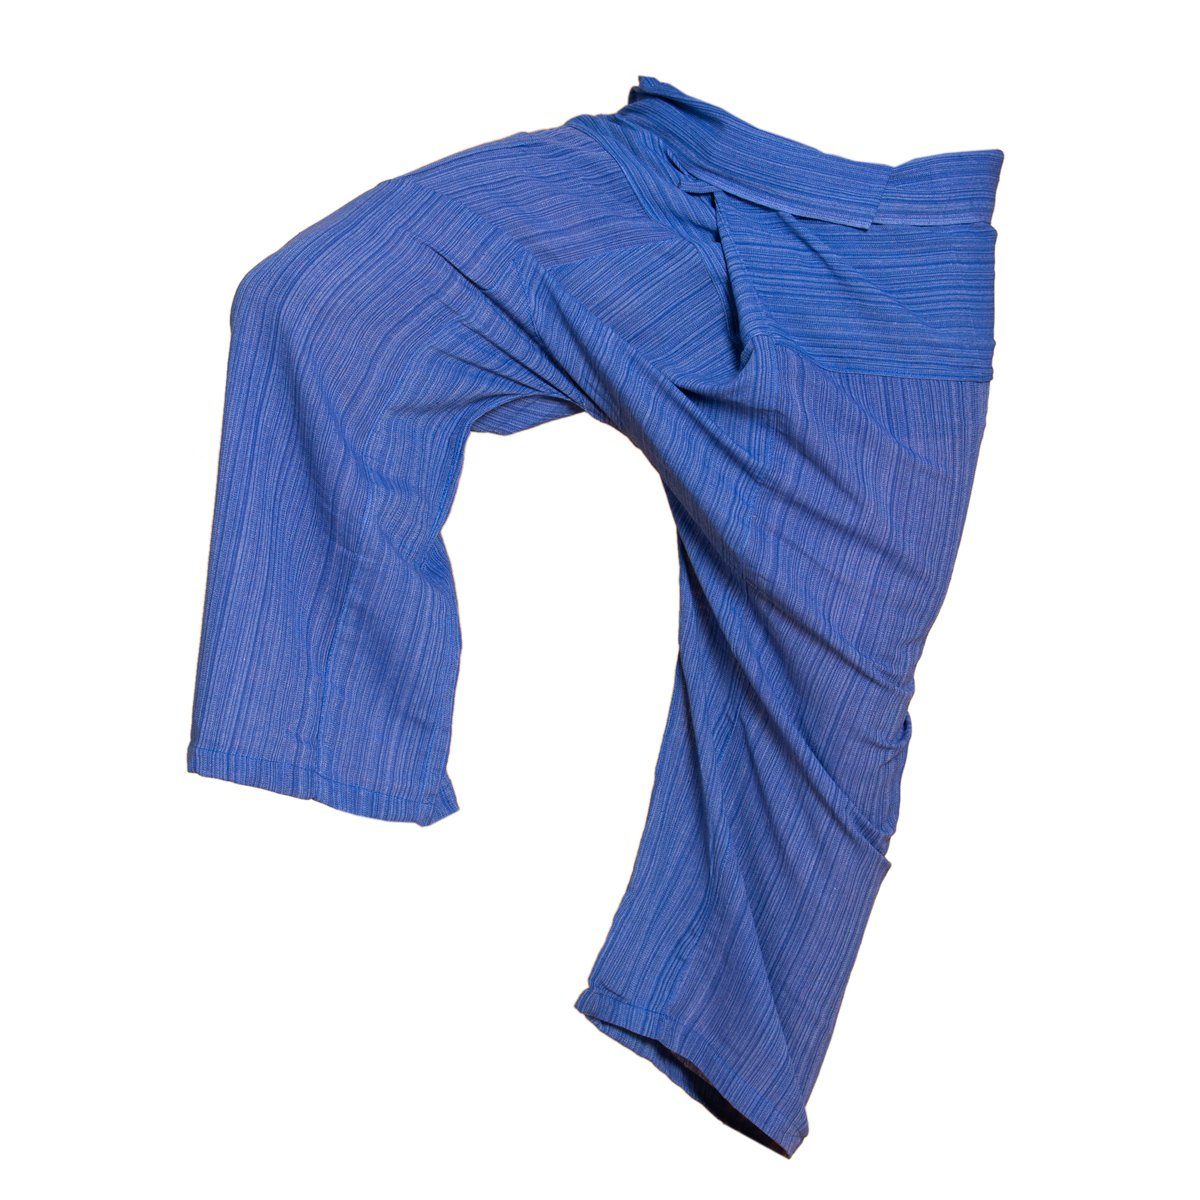 Wickelhose Unisex Baumwolle Thai bequeme Wellnesshose blau Fischerhose jeans Freizeithose PANASIAM fit als Lini loose aus Yogahose Relaxhose